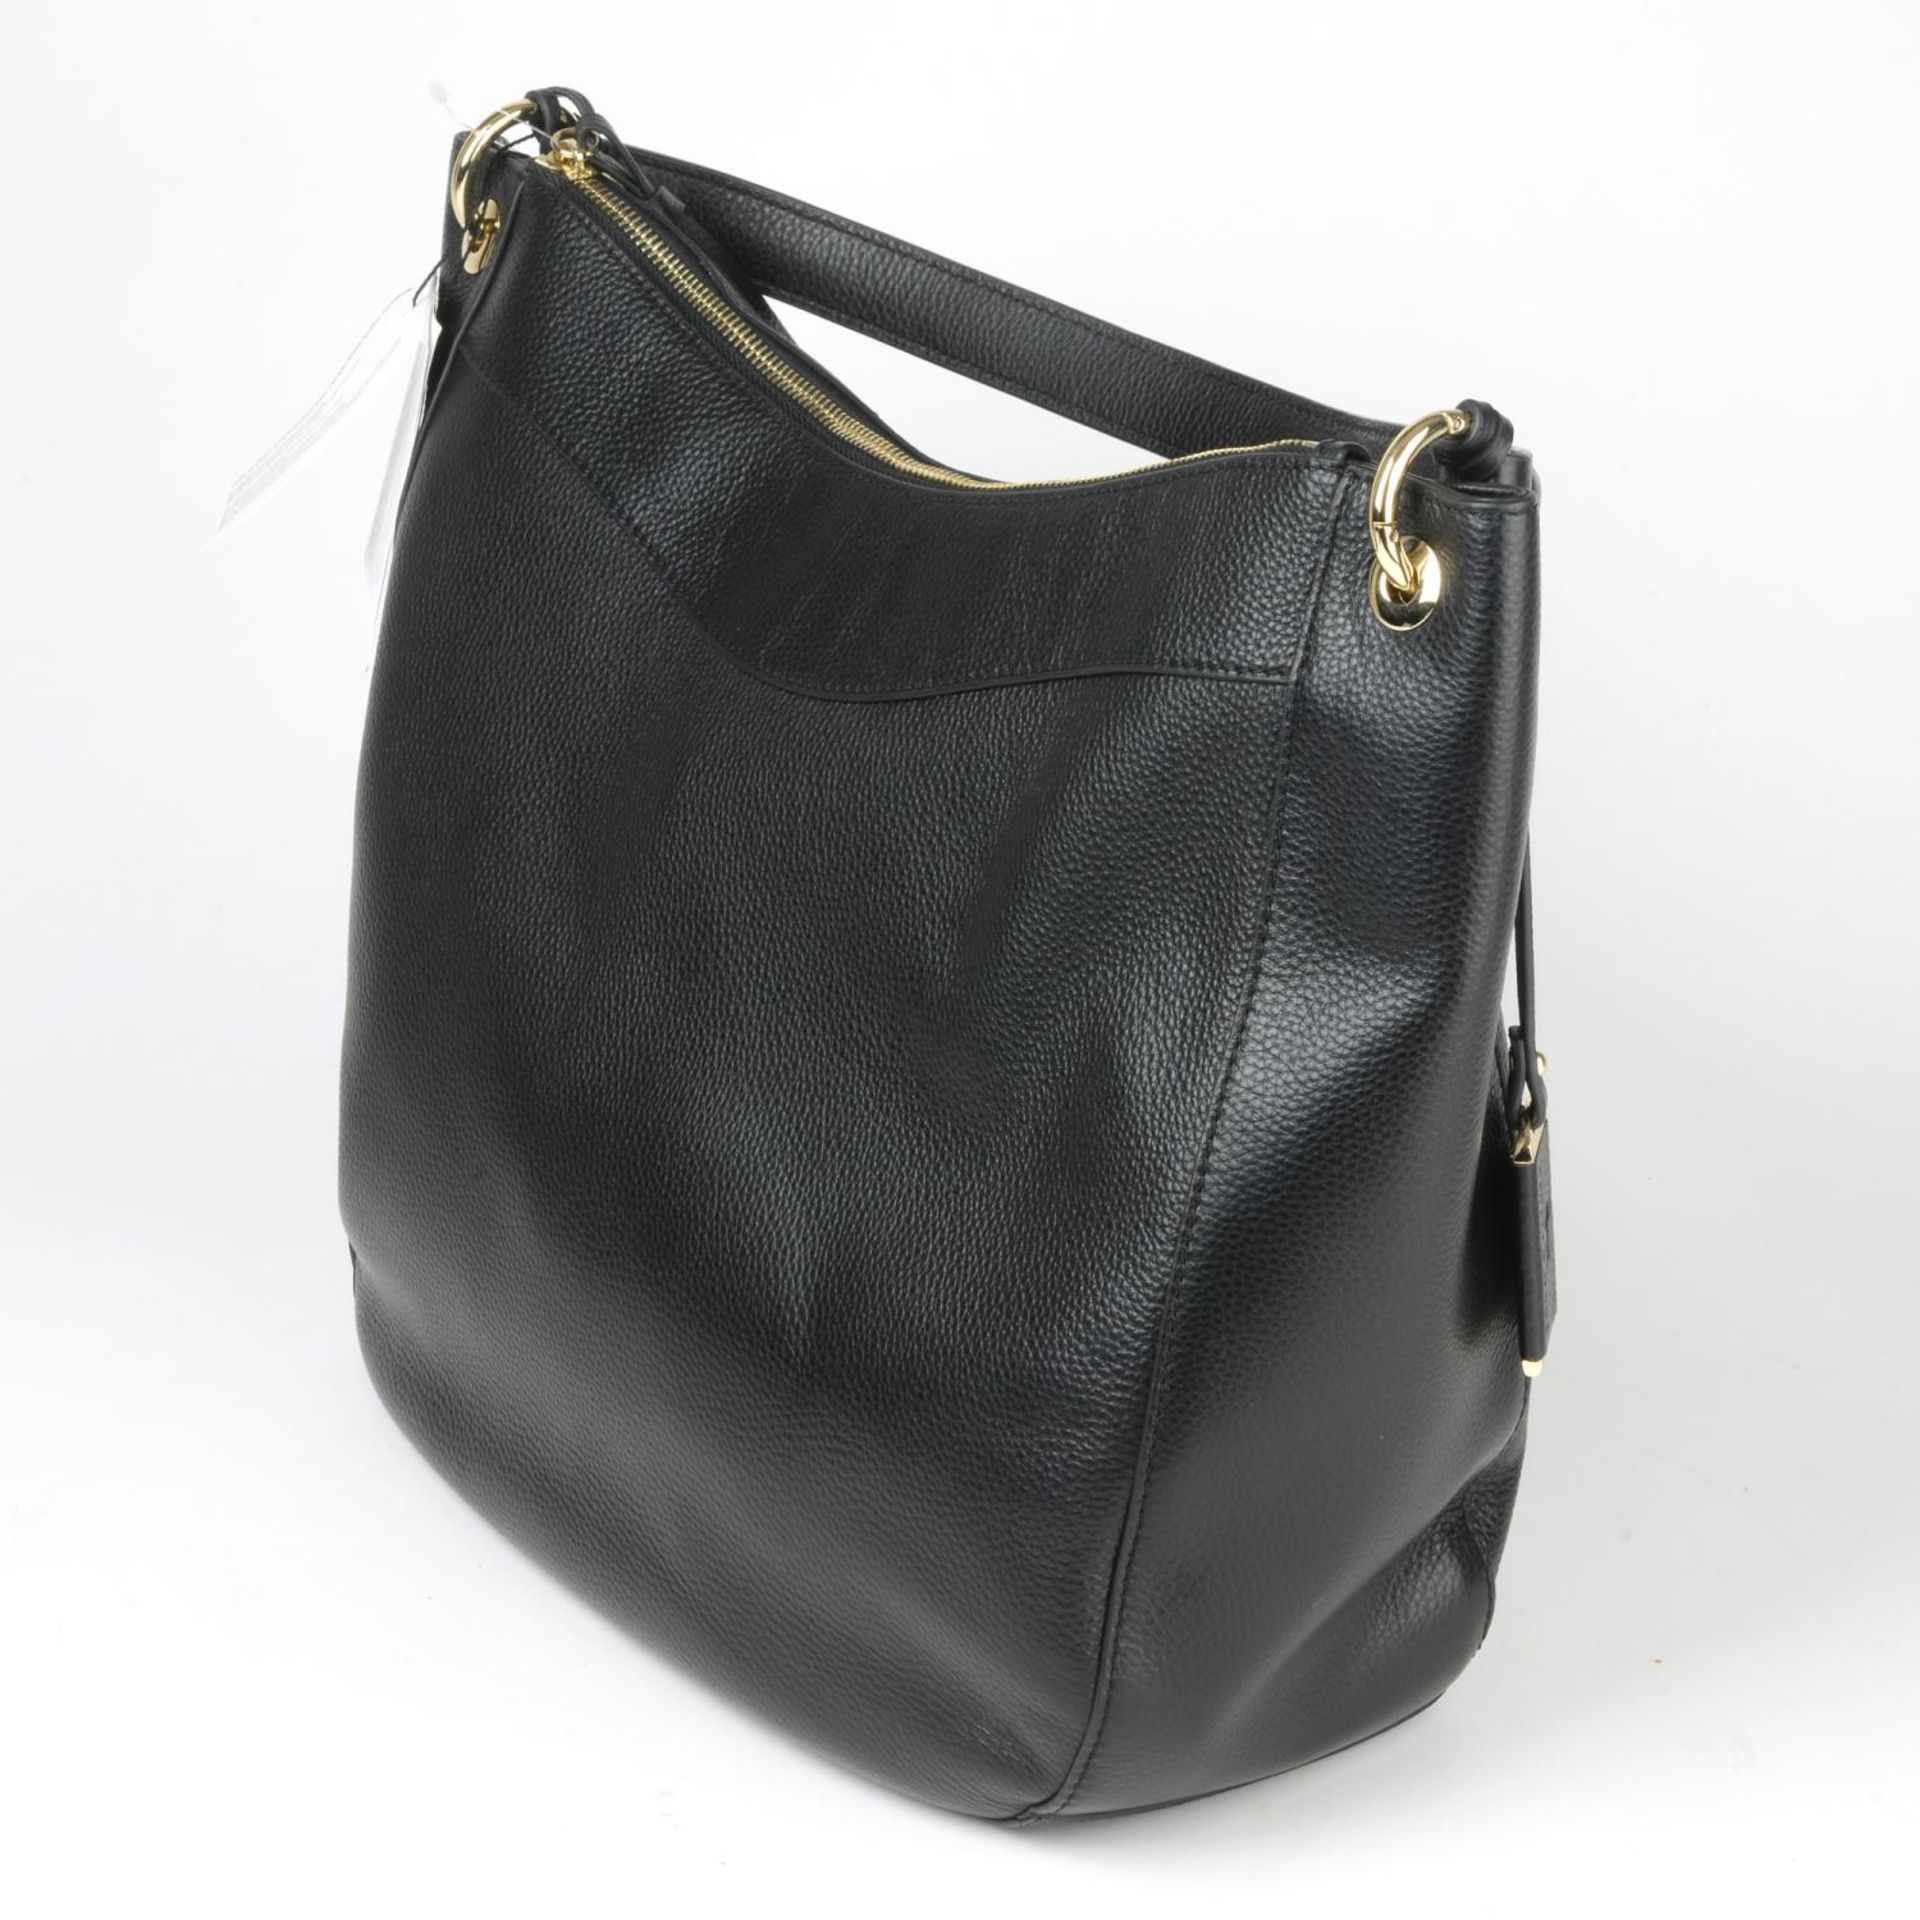 CAVALLO MODA - two leather handbags. - Bild 2 aus 4